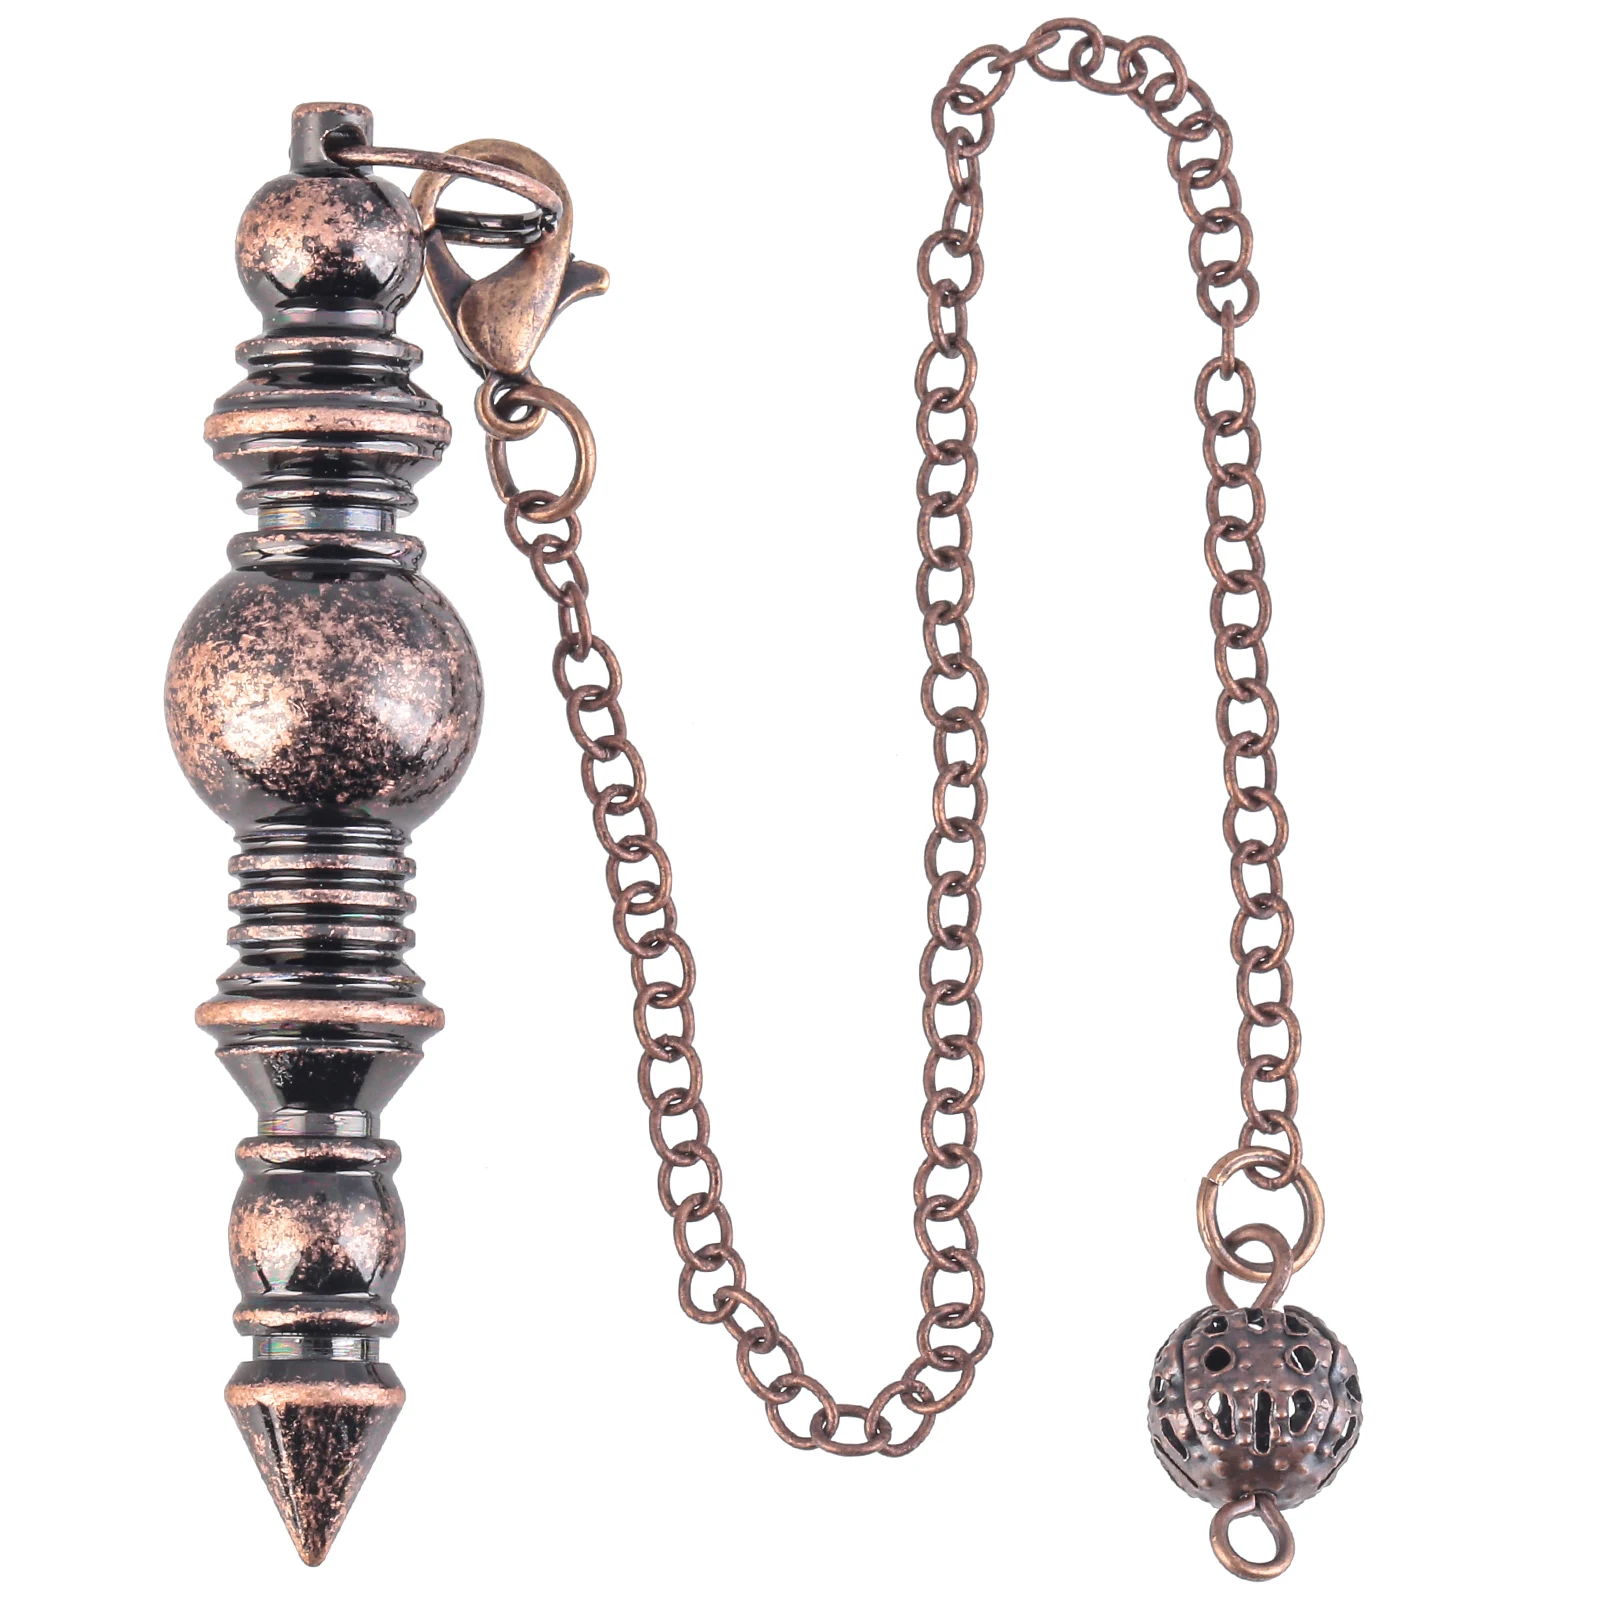 

Healing Reiki Metal Wand Dowsing Pendulum With Chain For Meditation Divination Chakra Balancing